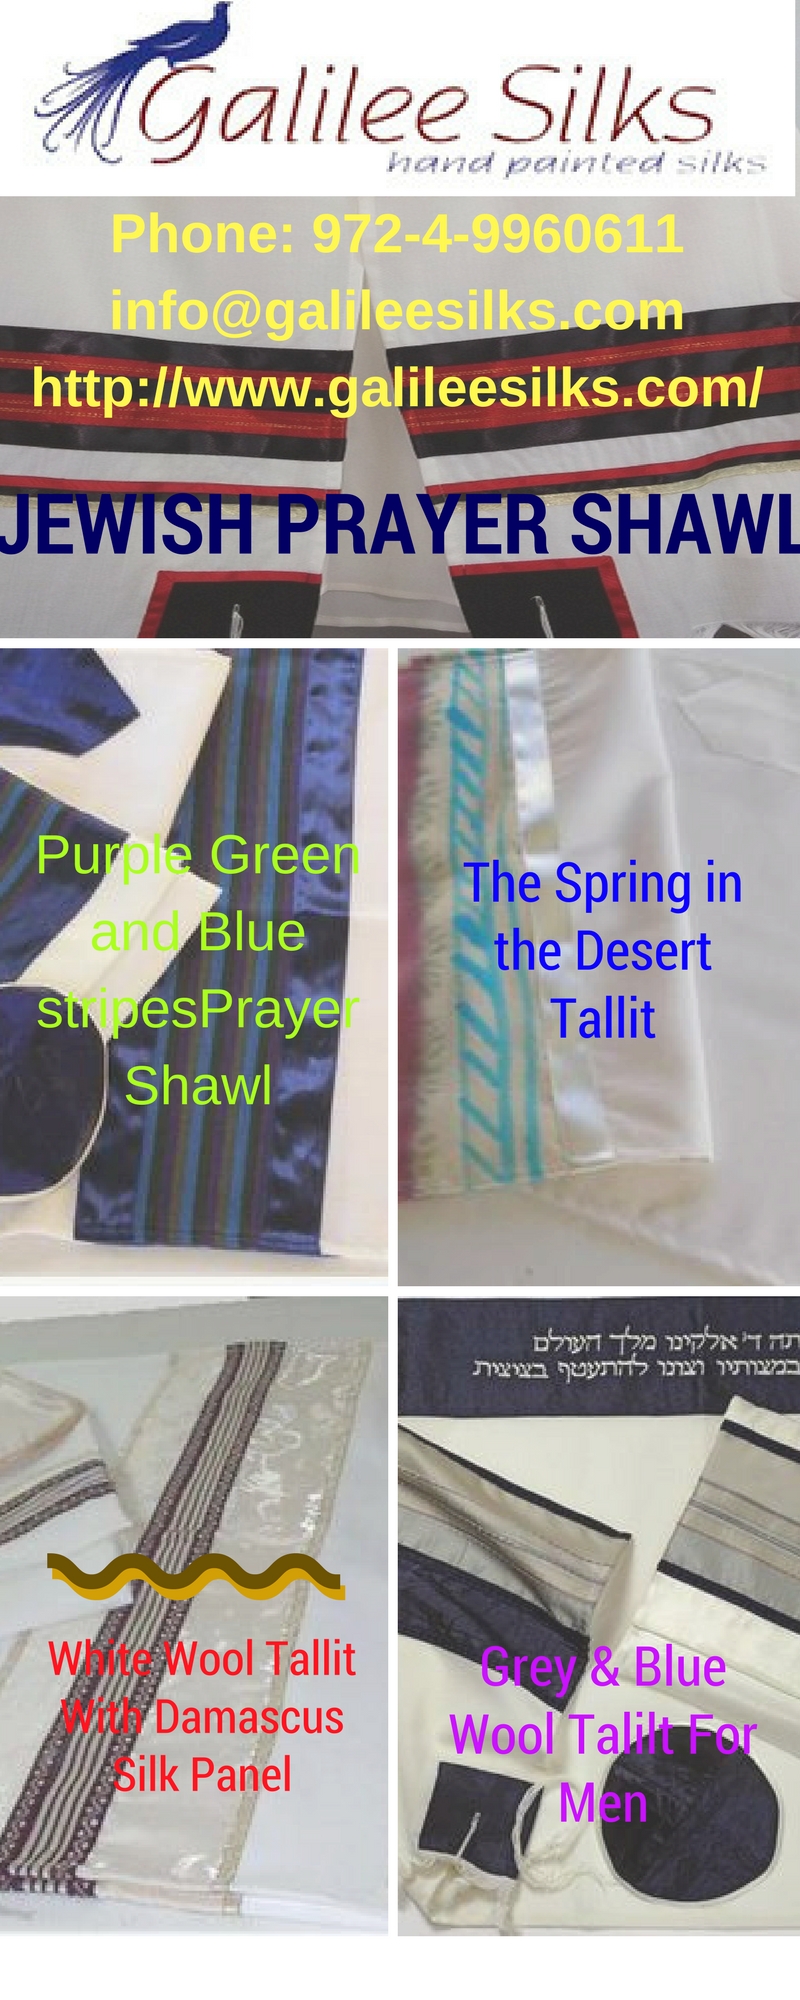 Buy Jewish prayer shawl only at Galileesilks.com.jpg  by amramrafi